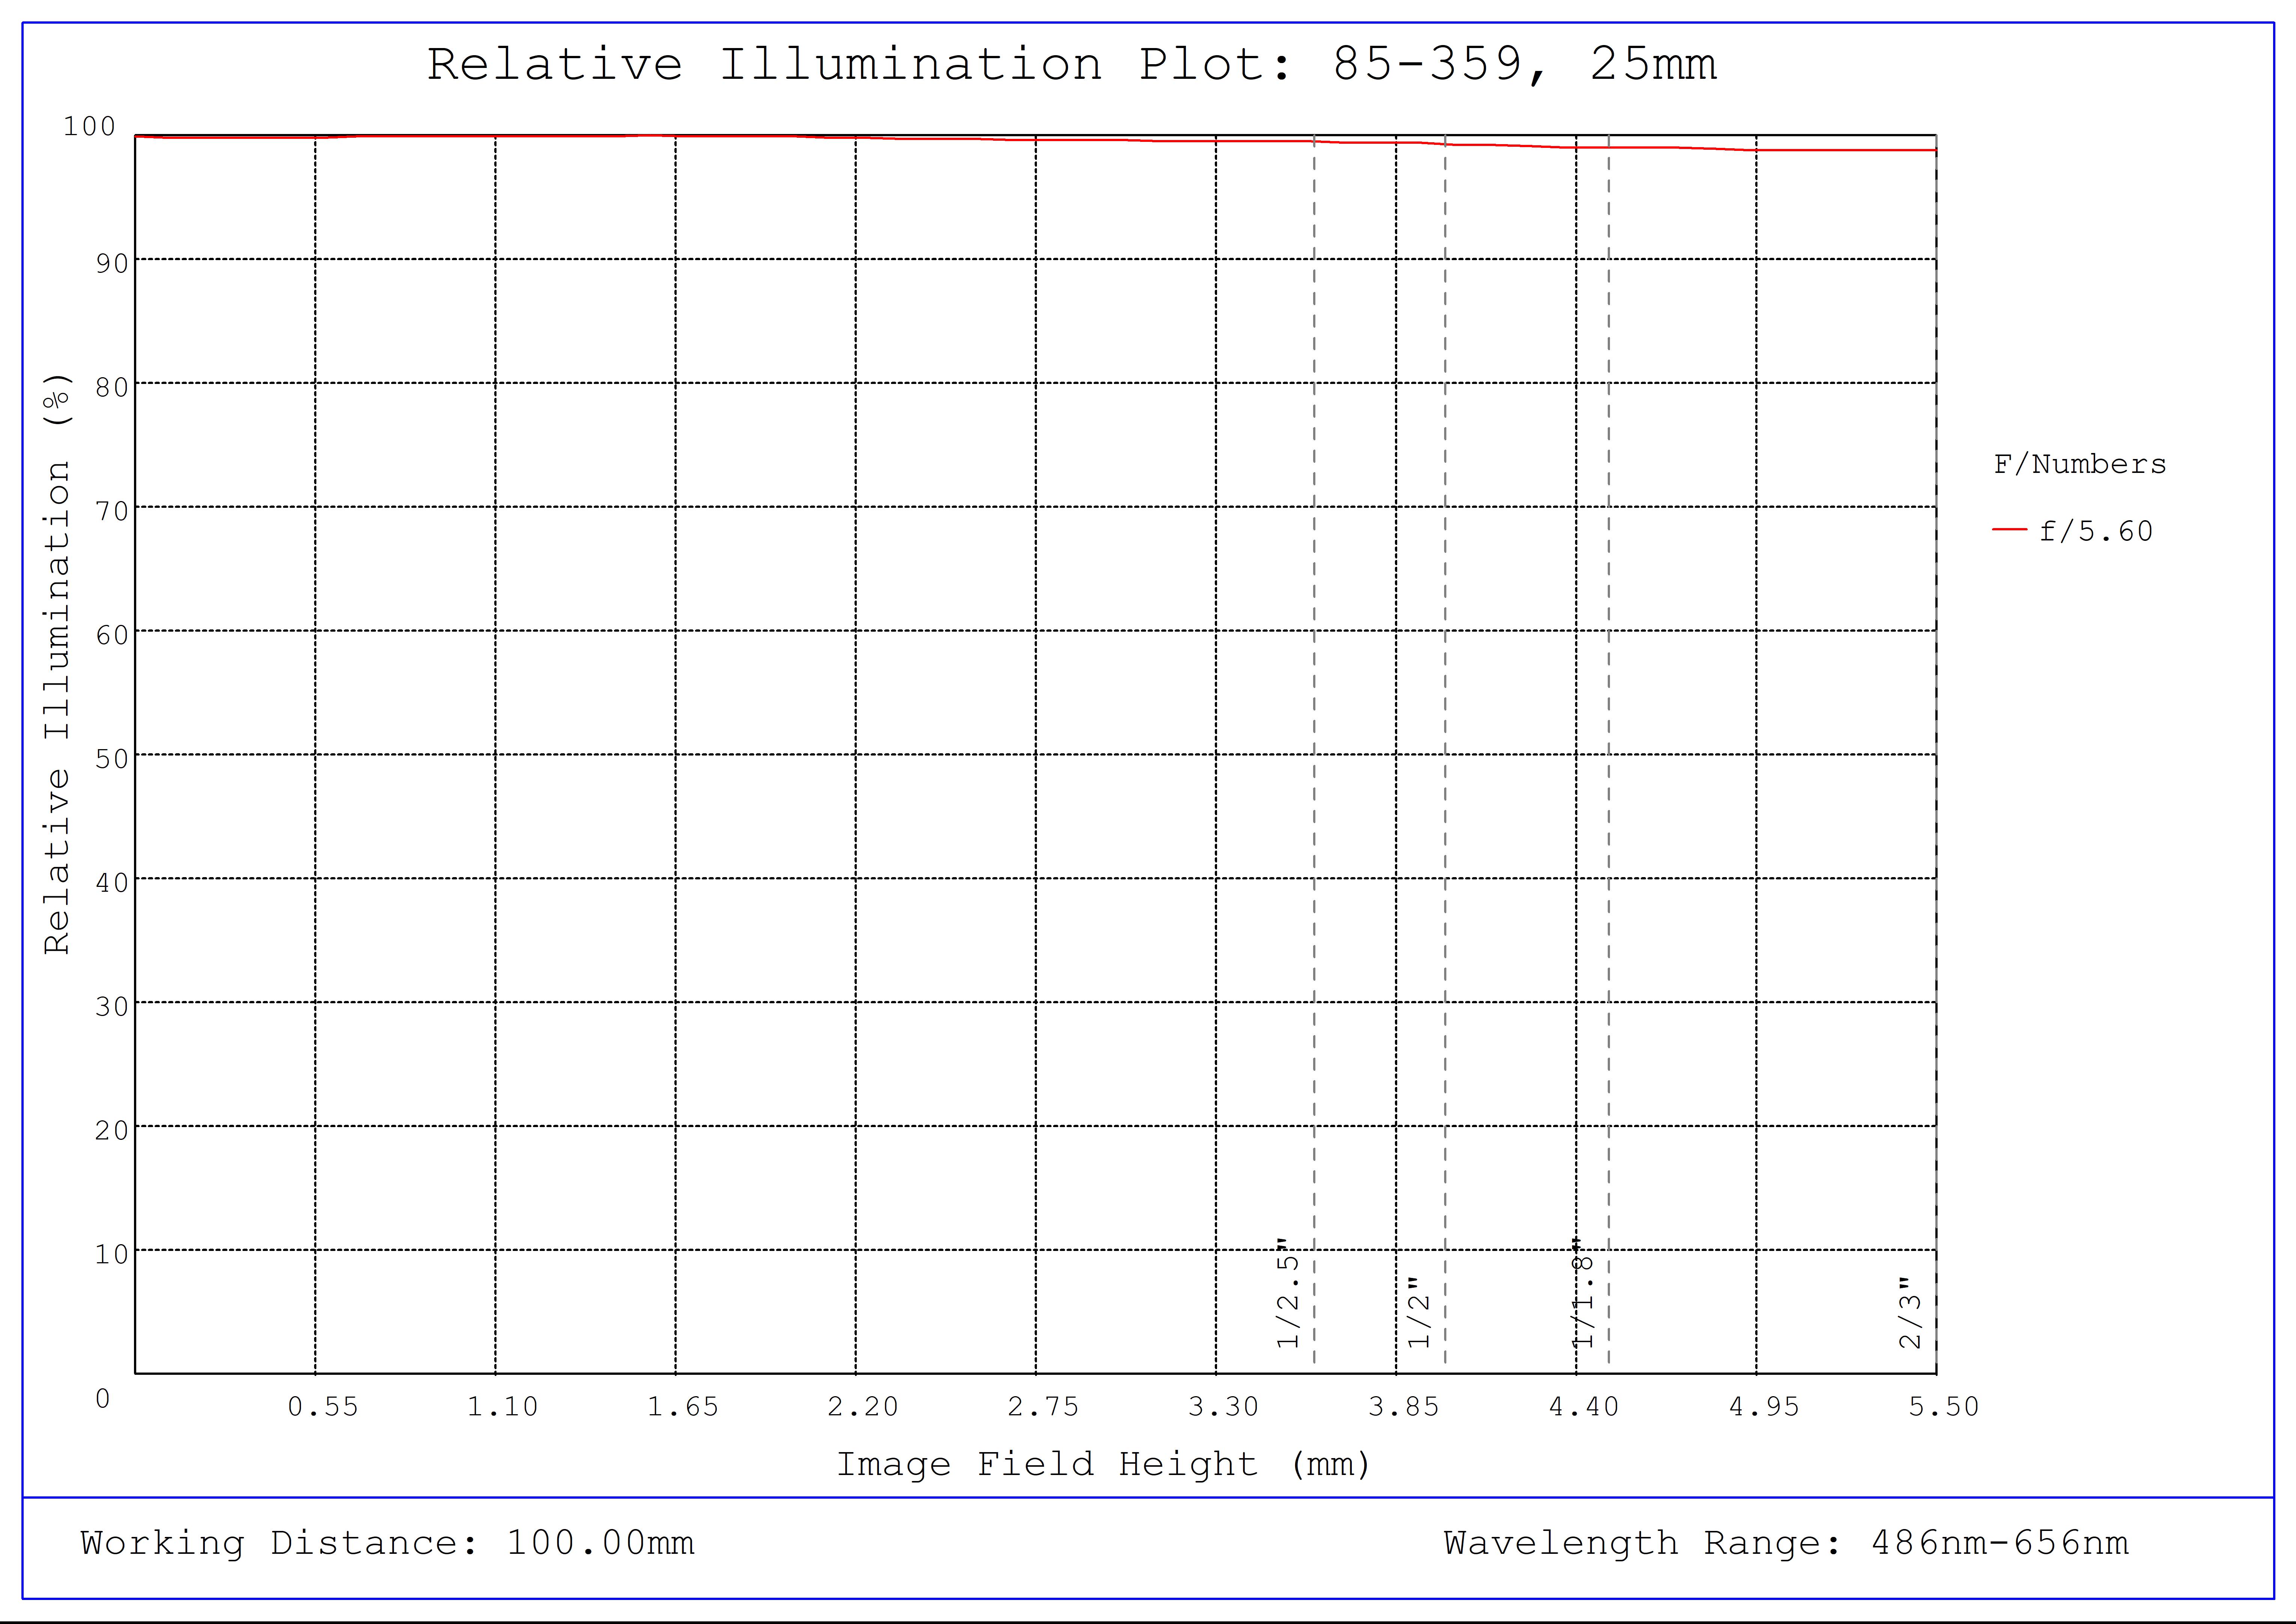 #85-359, 25mm, f/5.6 Ci Series Fixed Focal Length Lens, Relative Illumination Plot